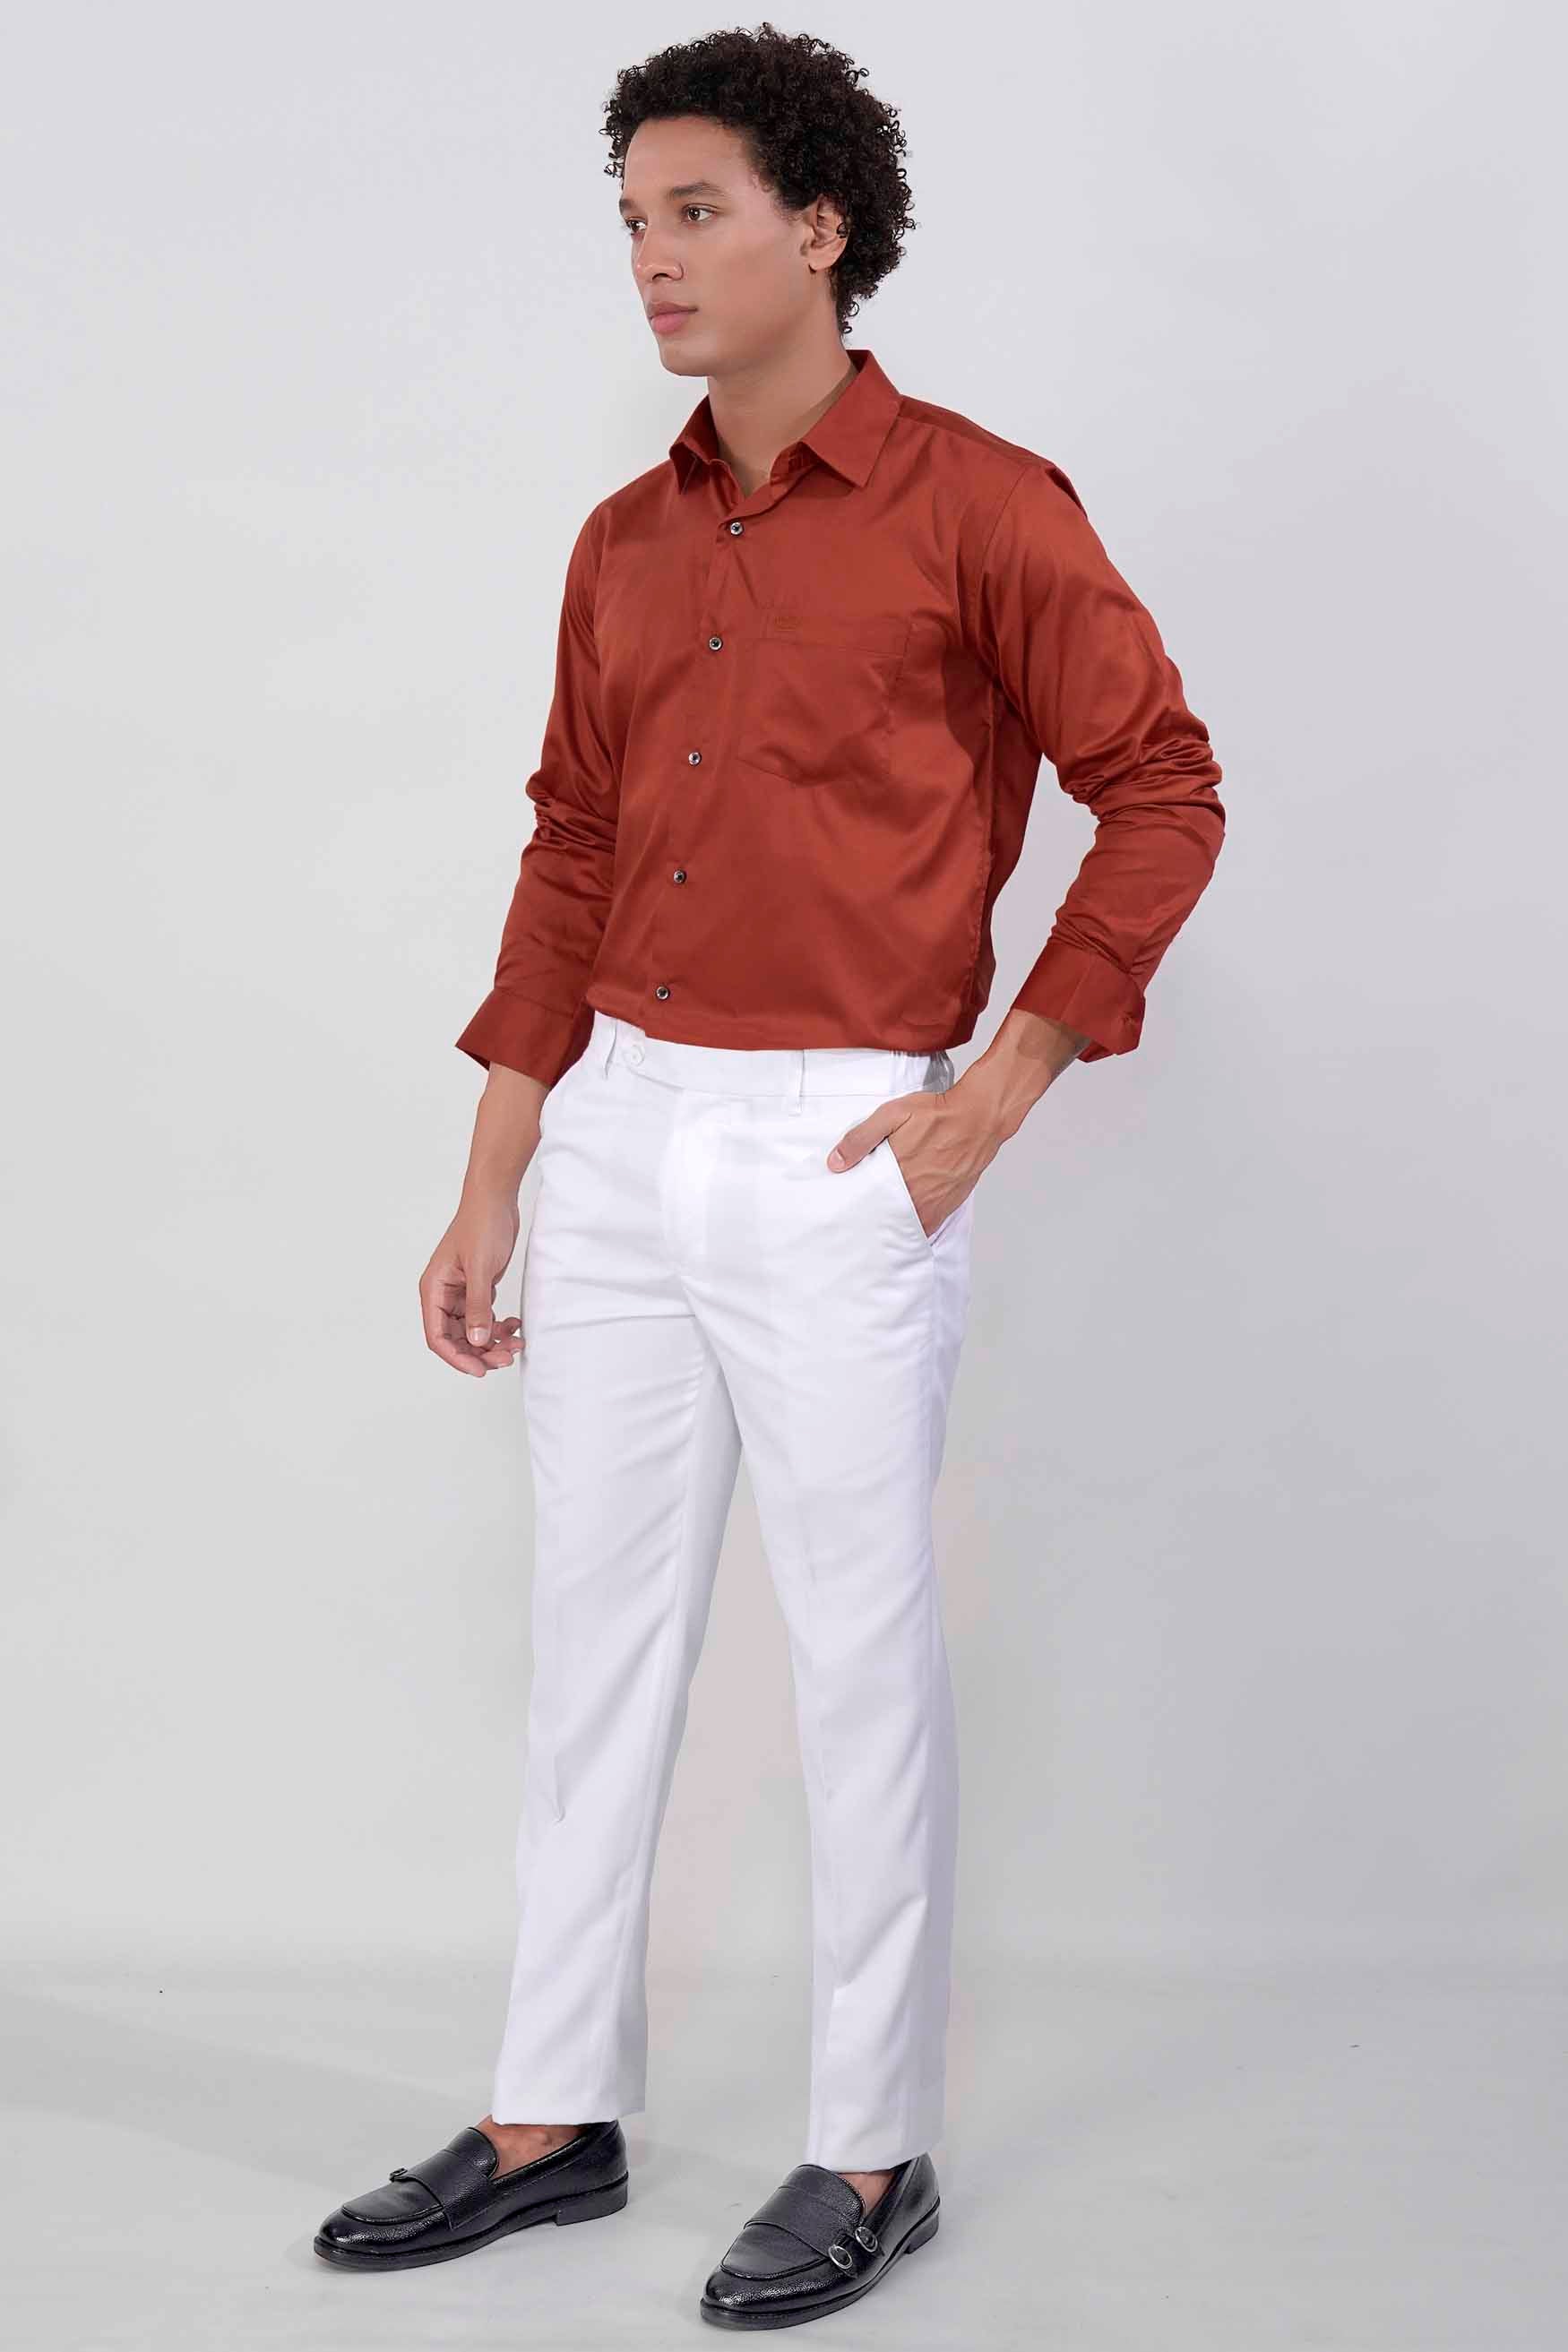 Deep Chestnut Orange Formal Plain-Solid Premium Cotton Shirt For Men